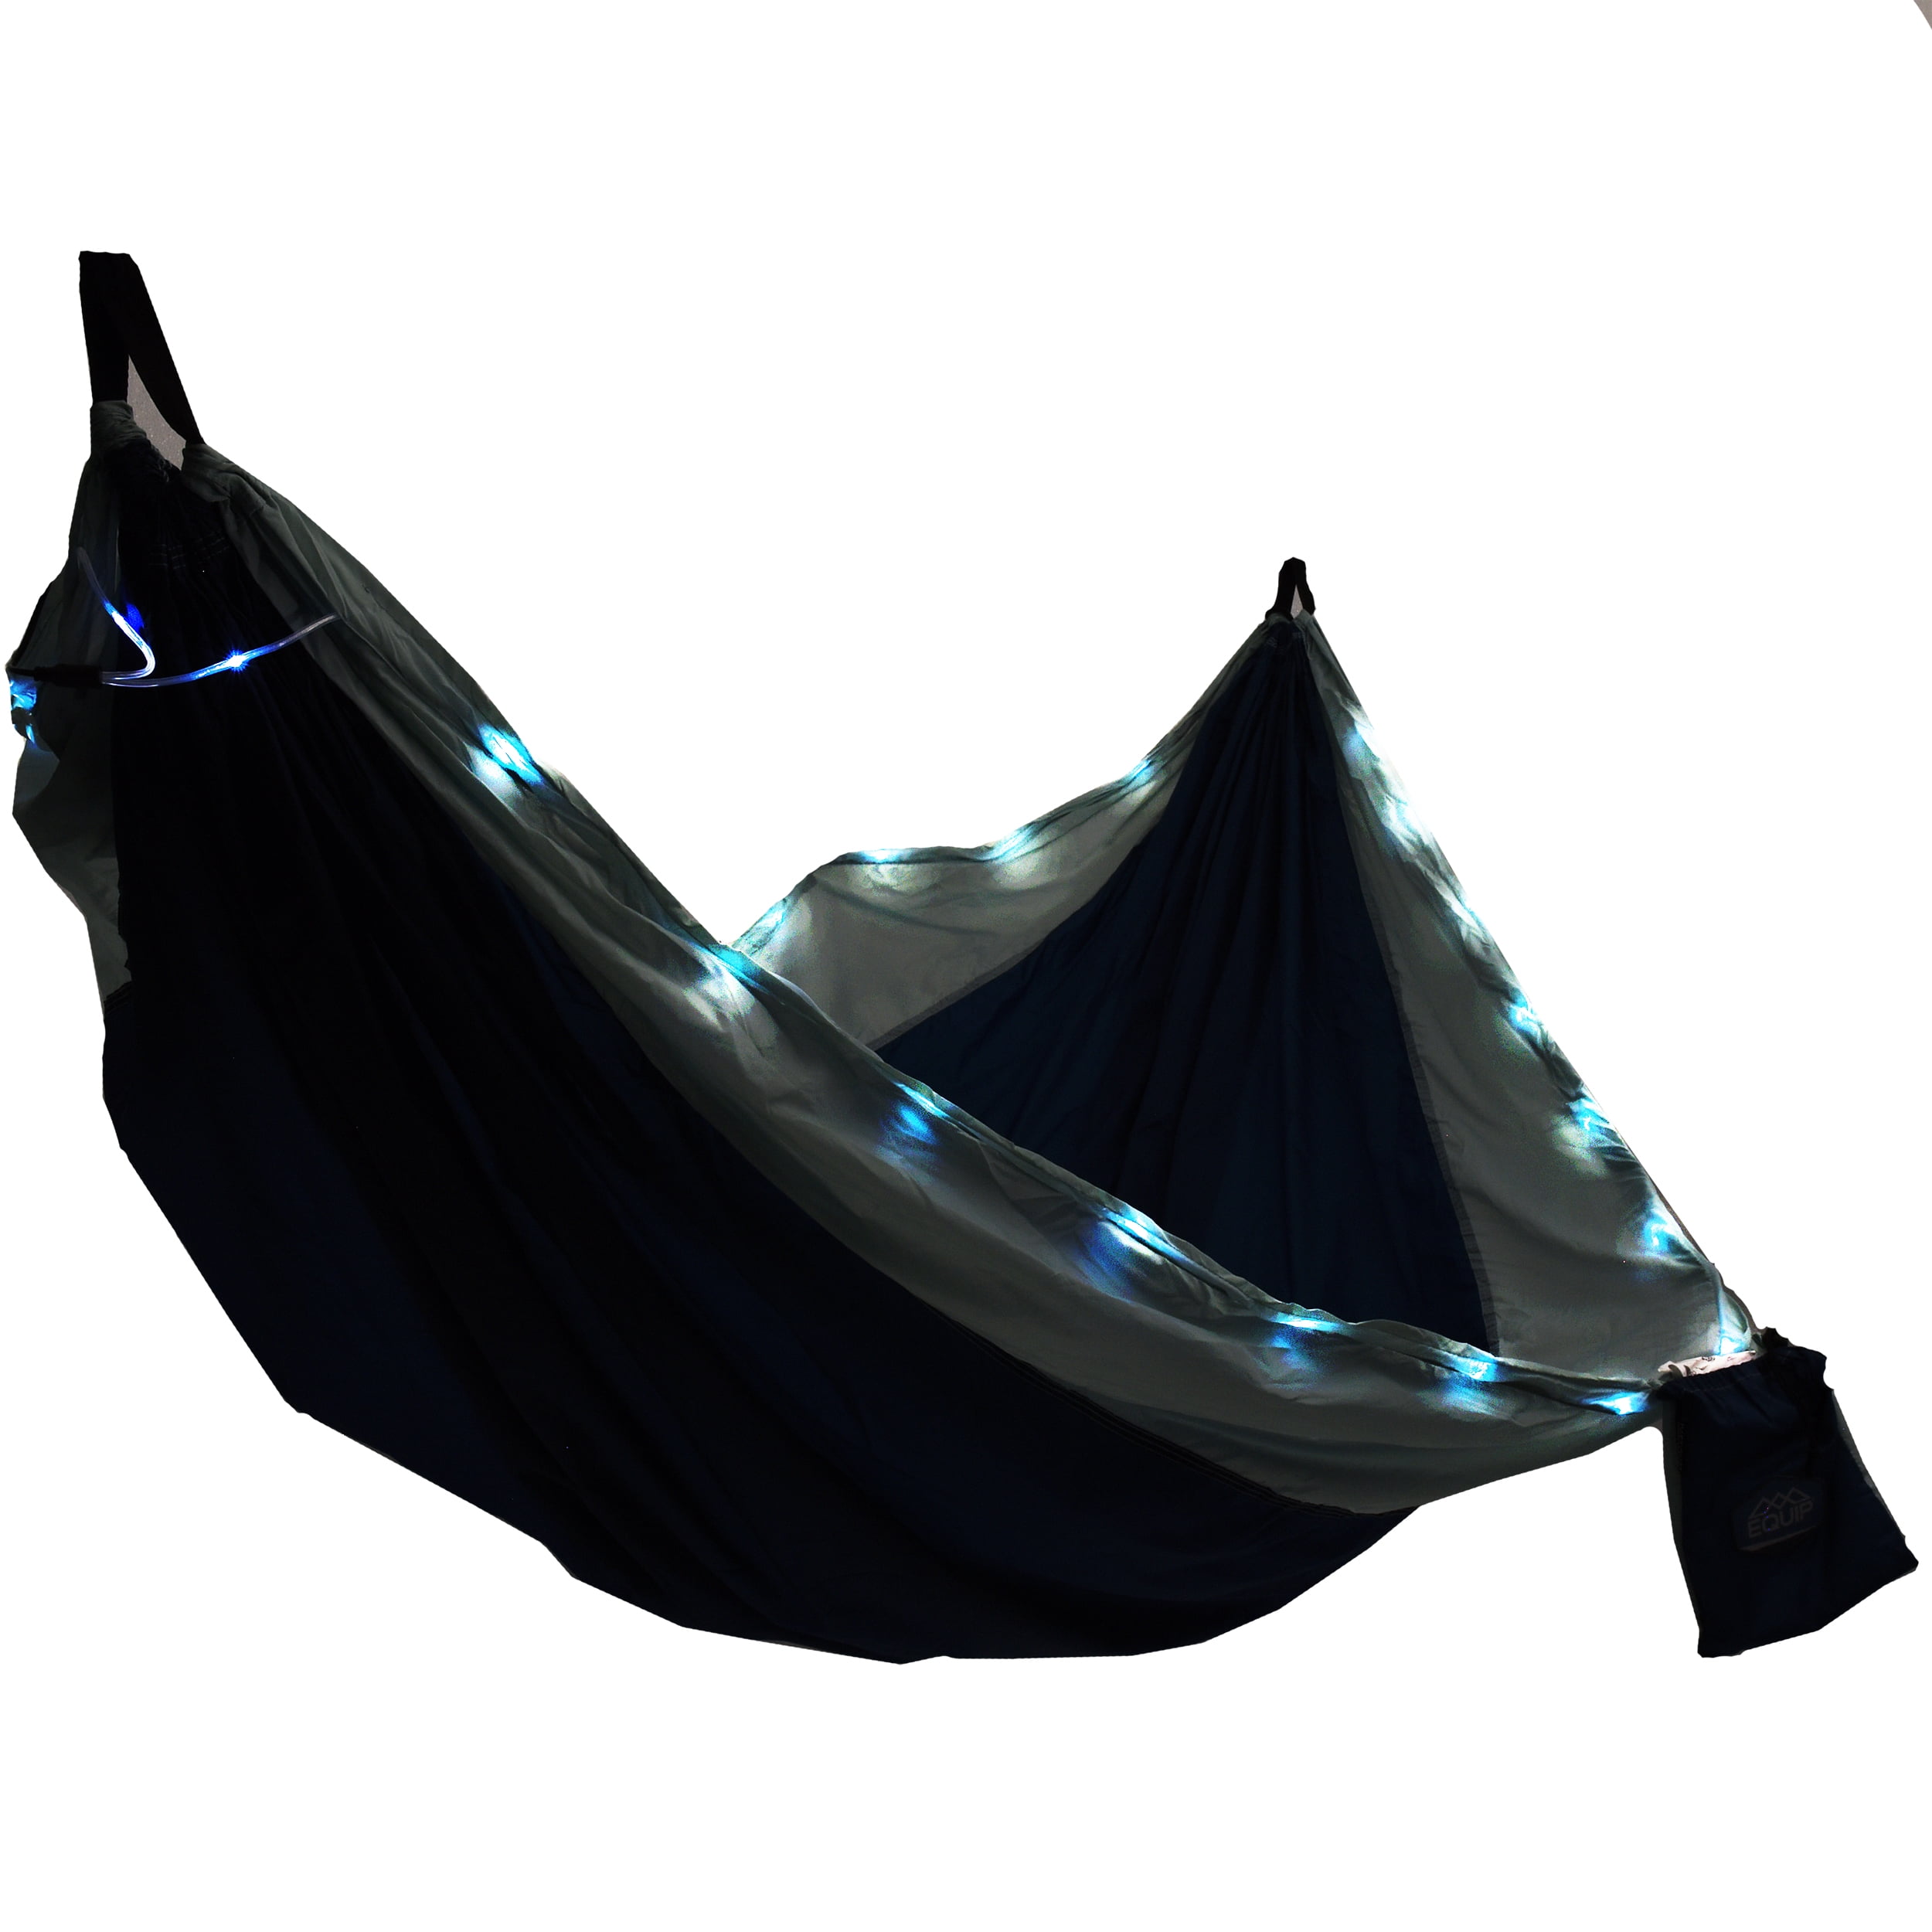 Equip Illuminated Nylon Portable Camping Travel Hammock, 2 Person, Blue & Dark Blue, Size 124" L x 77" W